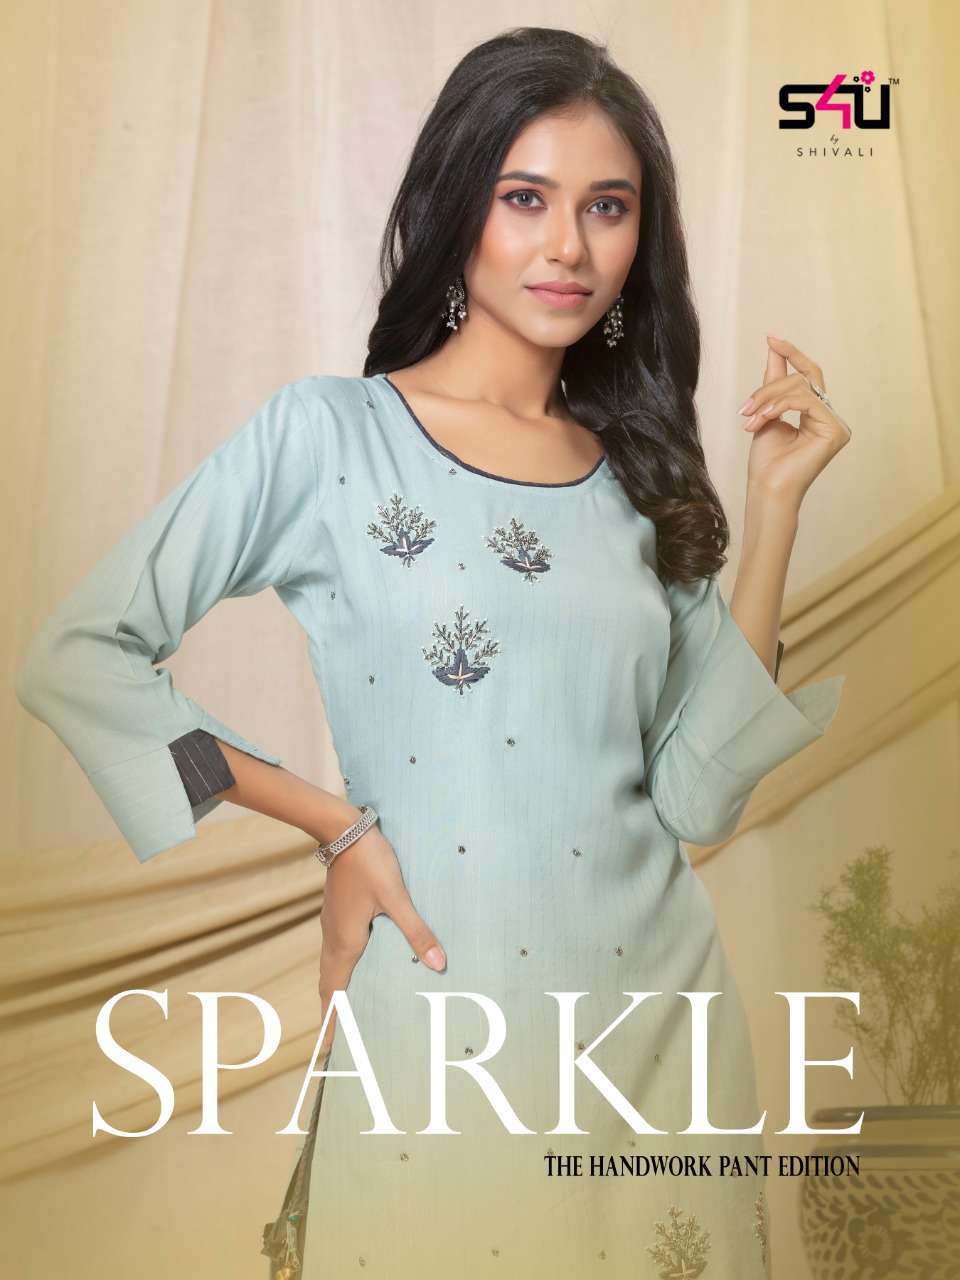 S4U Sparkles By Shivali Designer Kurti pant Sets Catalog Supplier in Surat